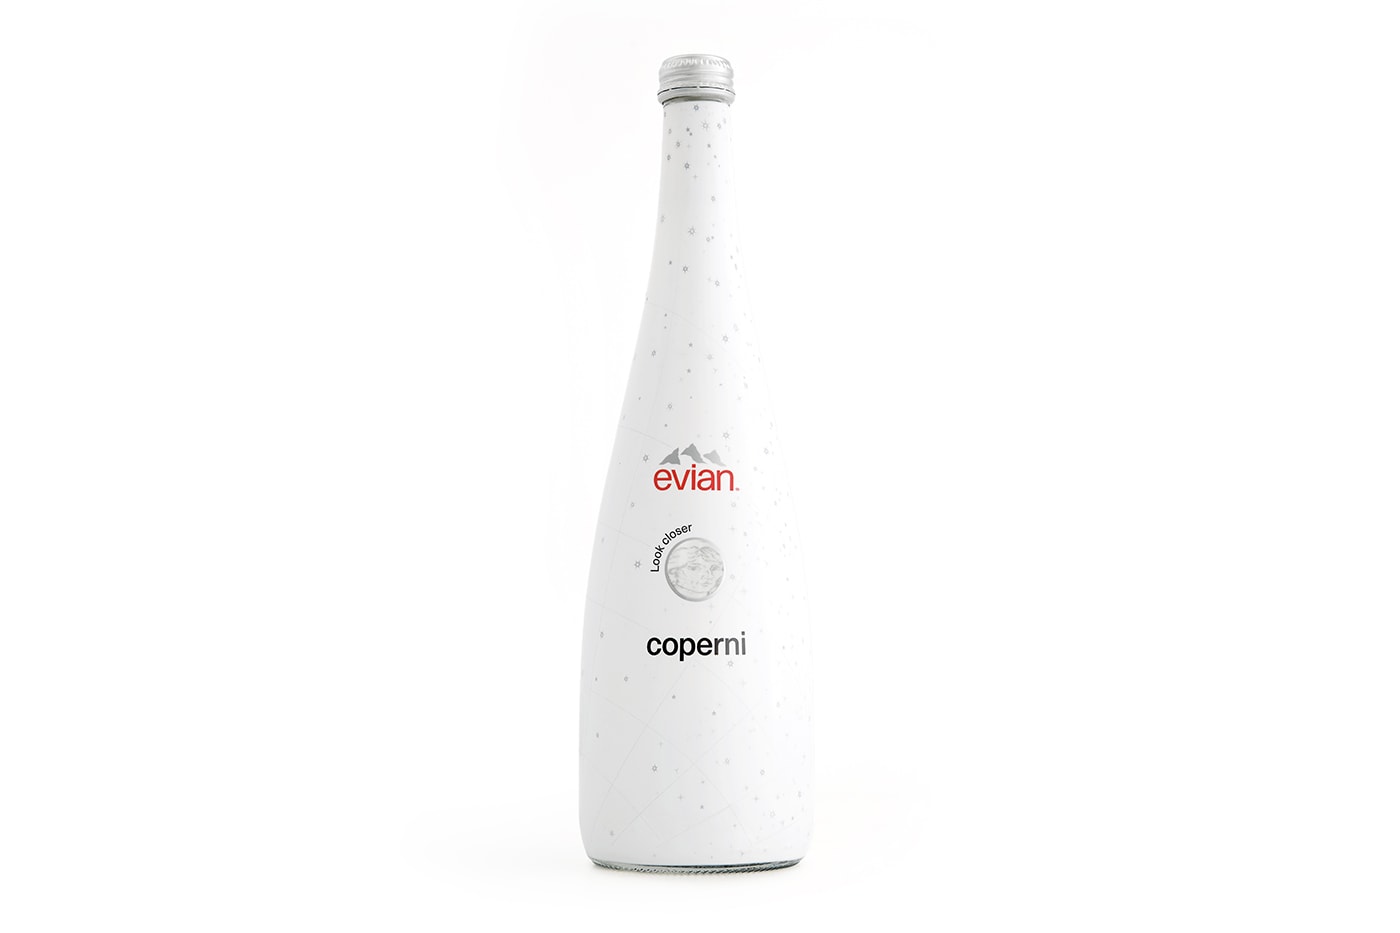 Coperni evian Bottle Collaboration Release Info Date Buy Price 